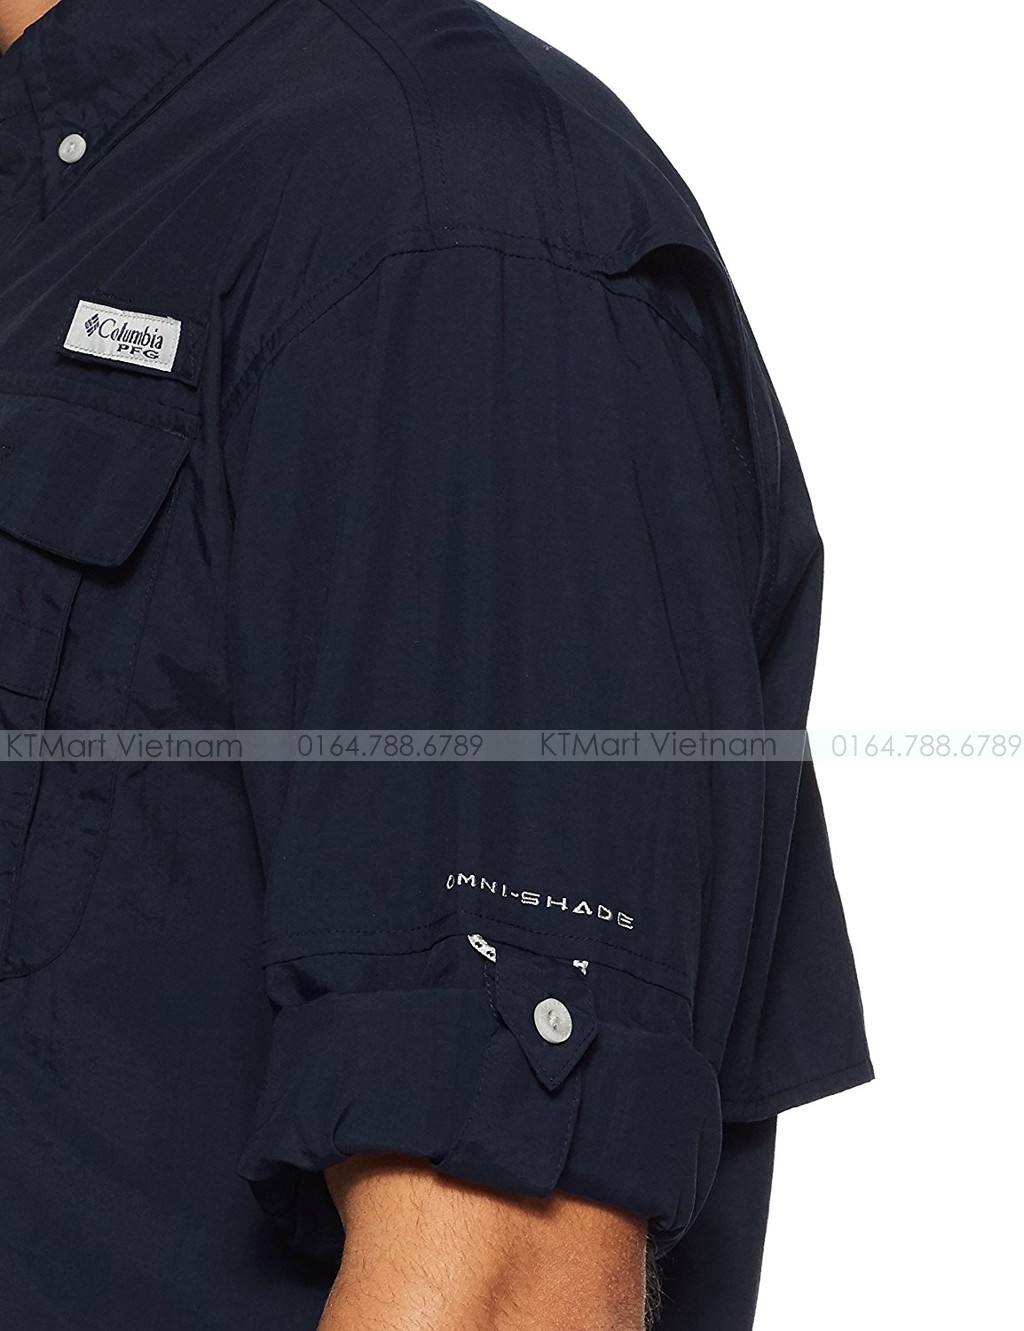 Columbia Men’s Bahama II Long Sleeve Shirt FT7048 Columbia ktmart.vn 3